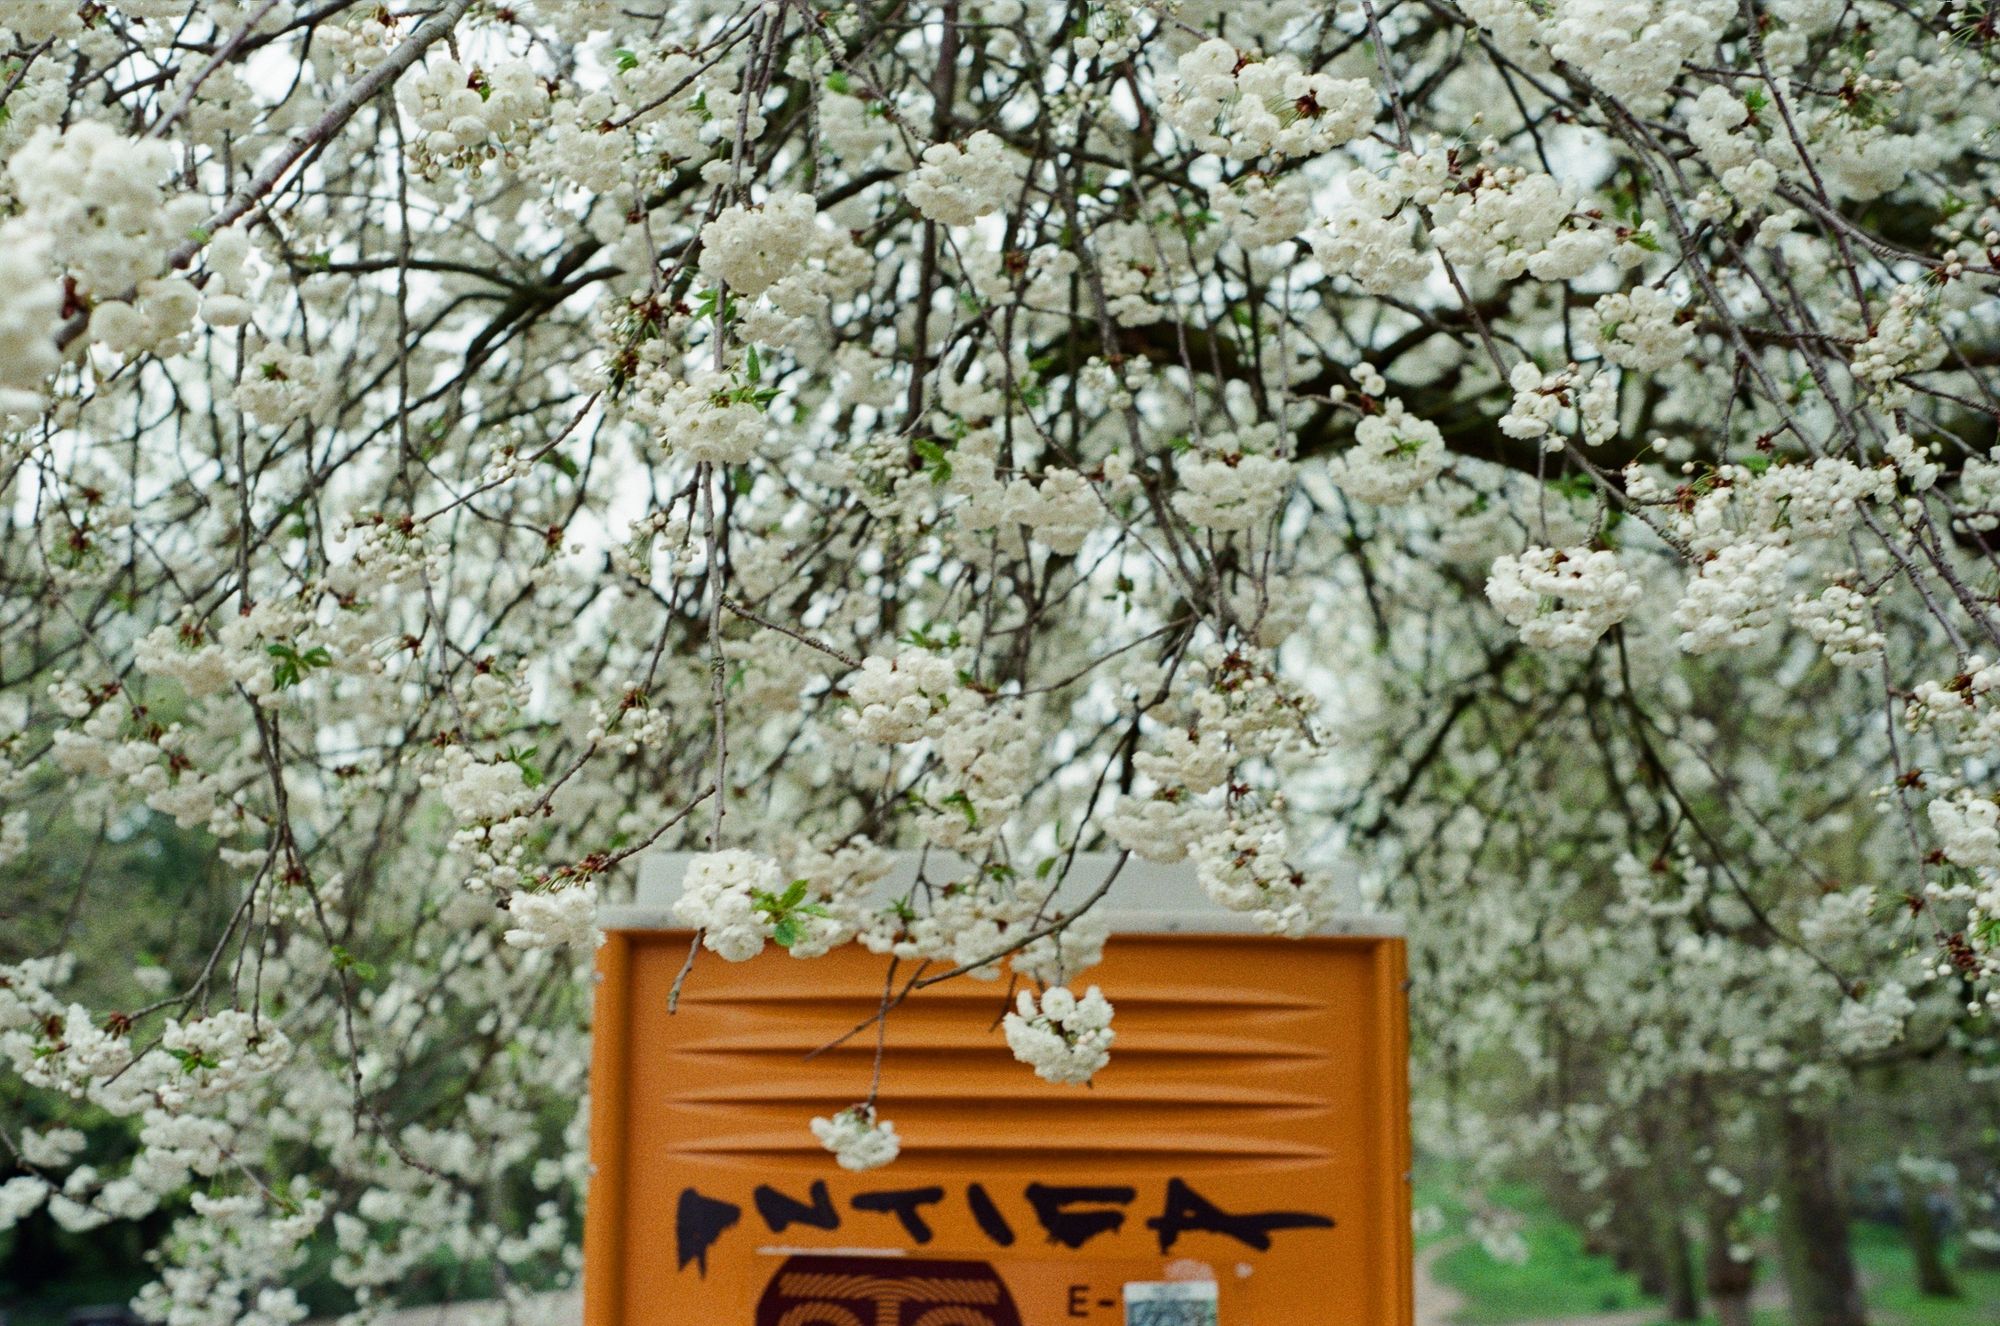 A blossom tree hangs down over a dark yellow portaloo, with graffiti on the door saying "ANTIFA".